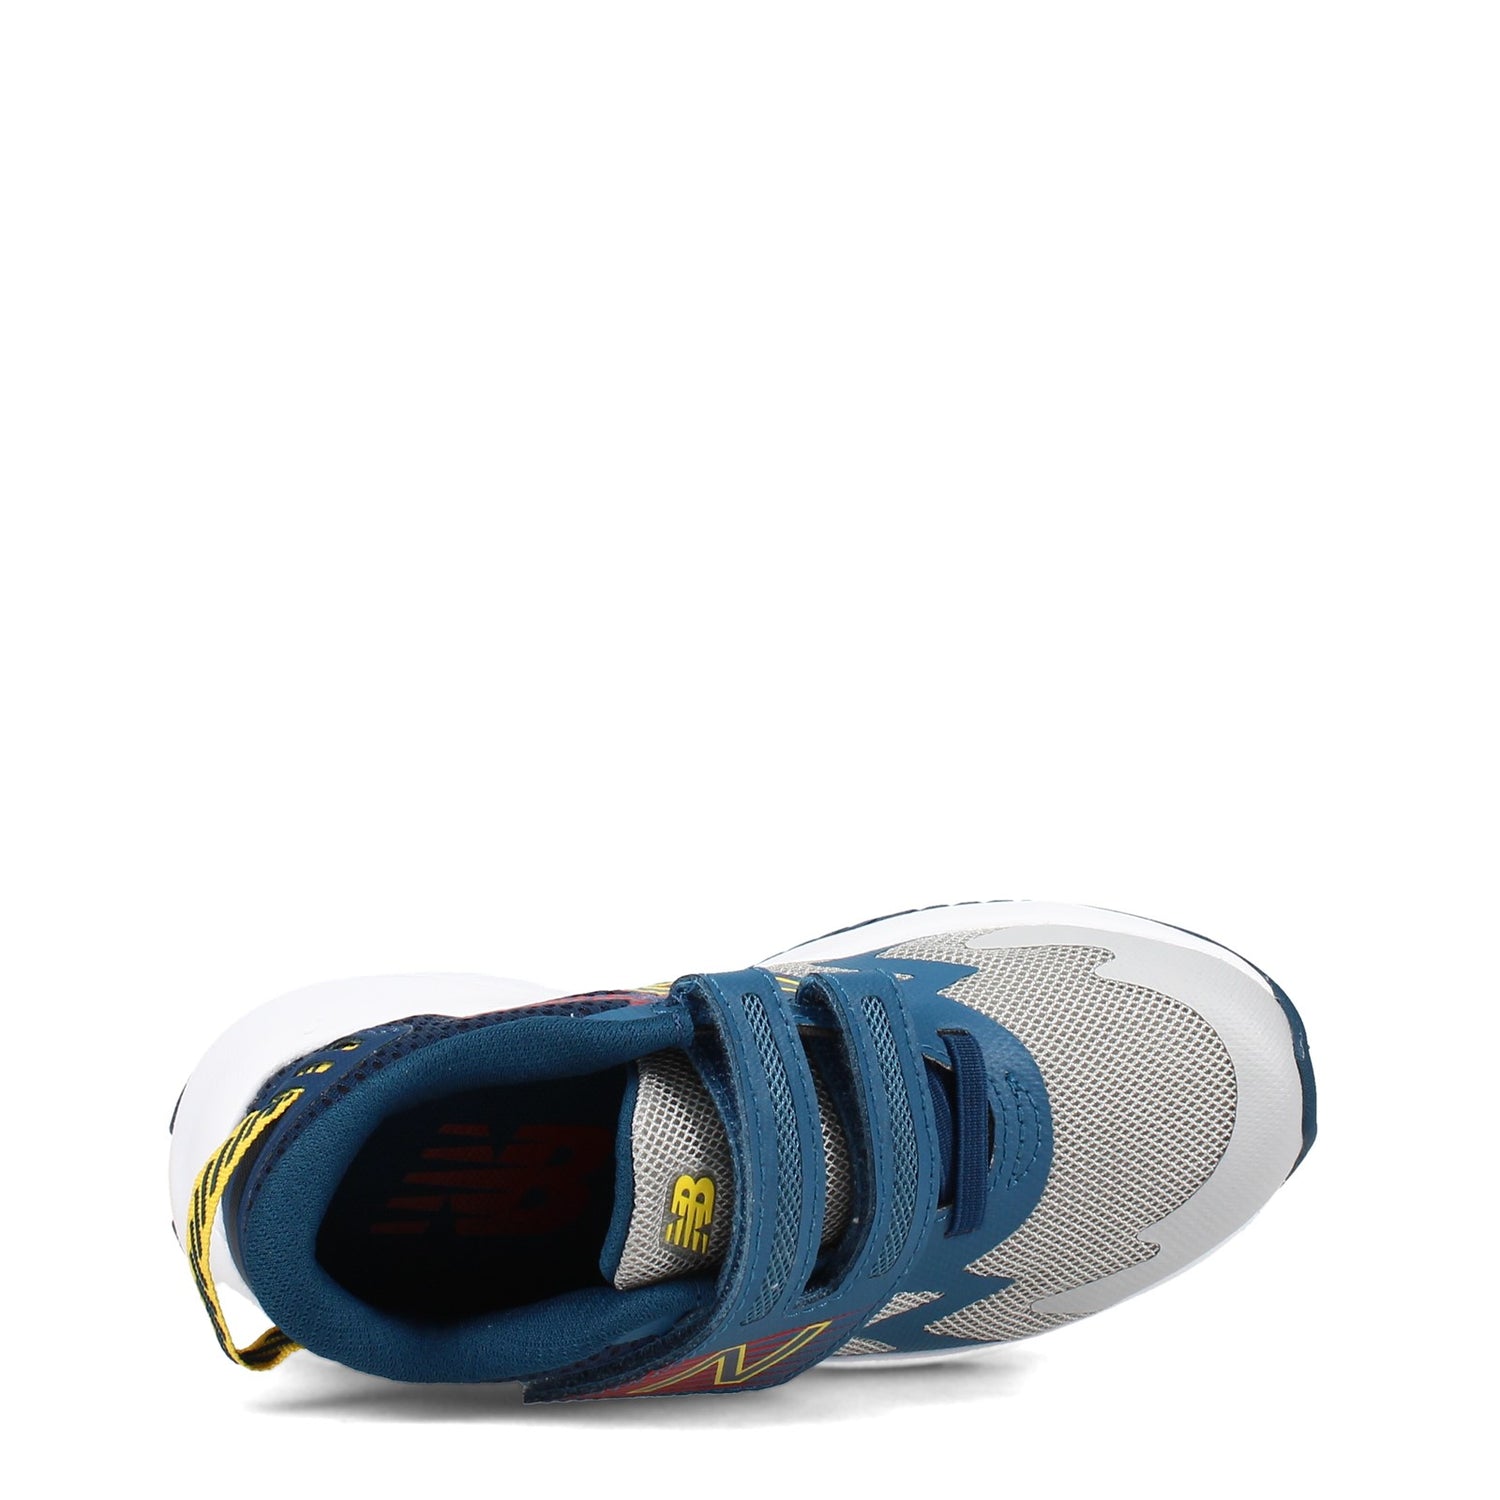 Peltz Shoes  Boy's New Balance Rave Run v1 Sneaker - Little Kid GREY BLUE RED PTRAVBG1